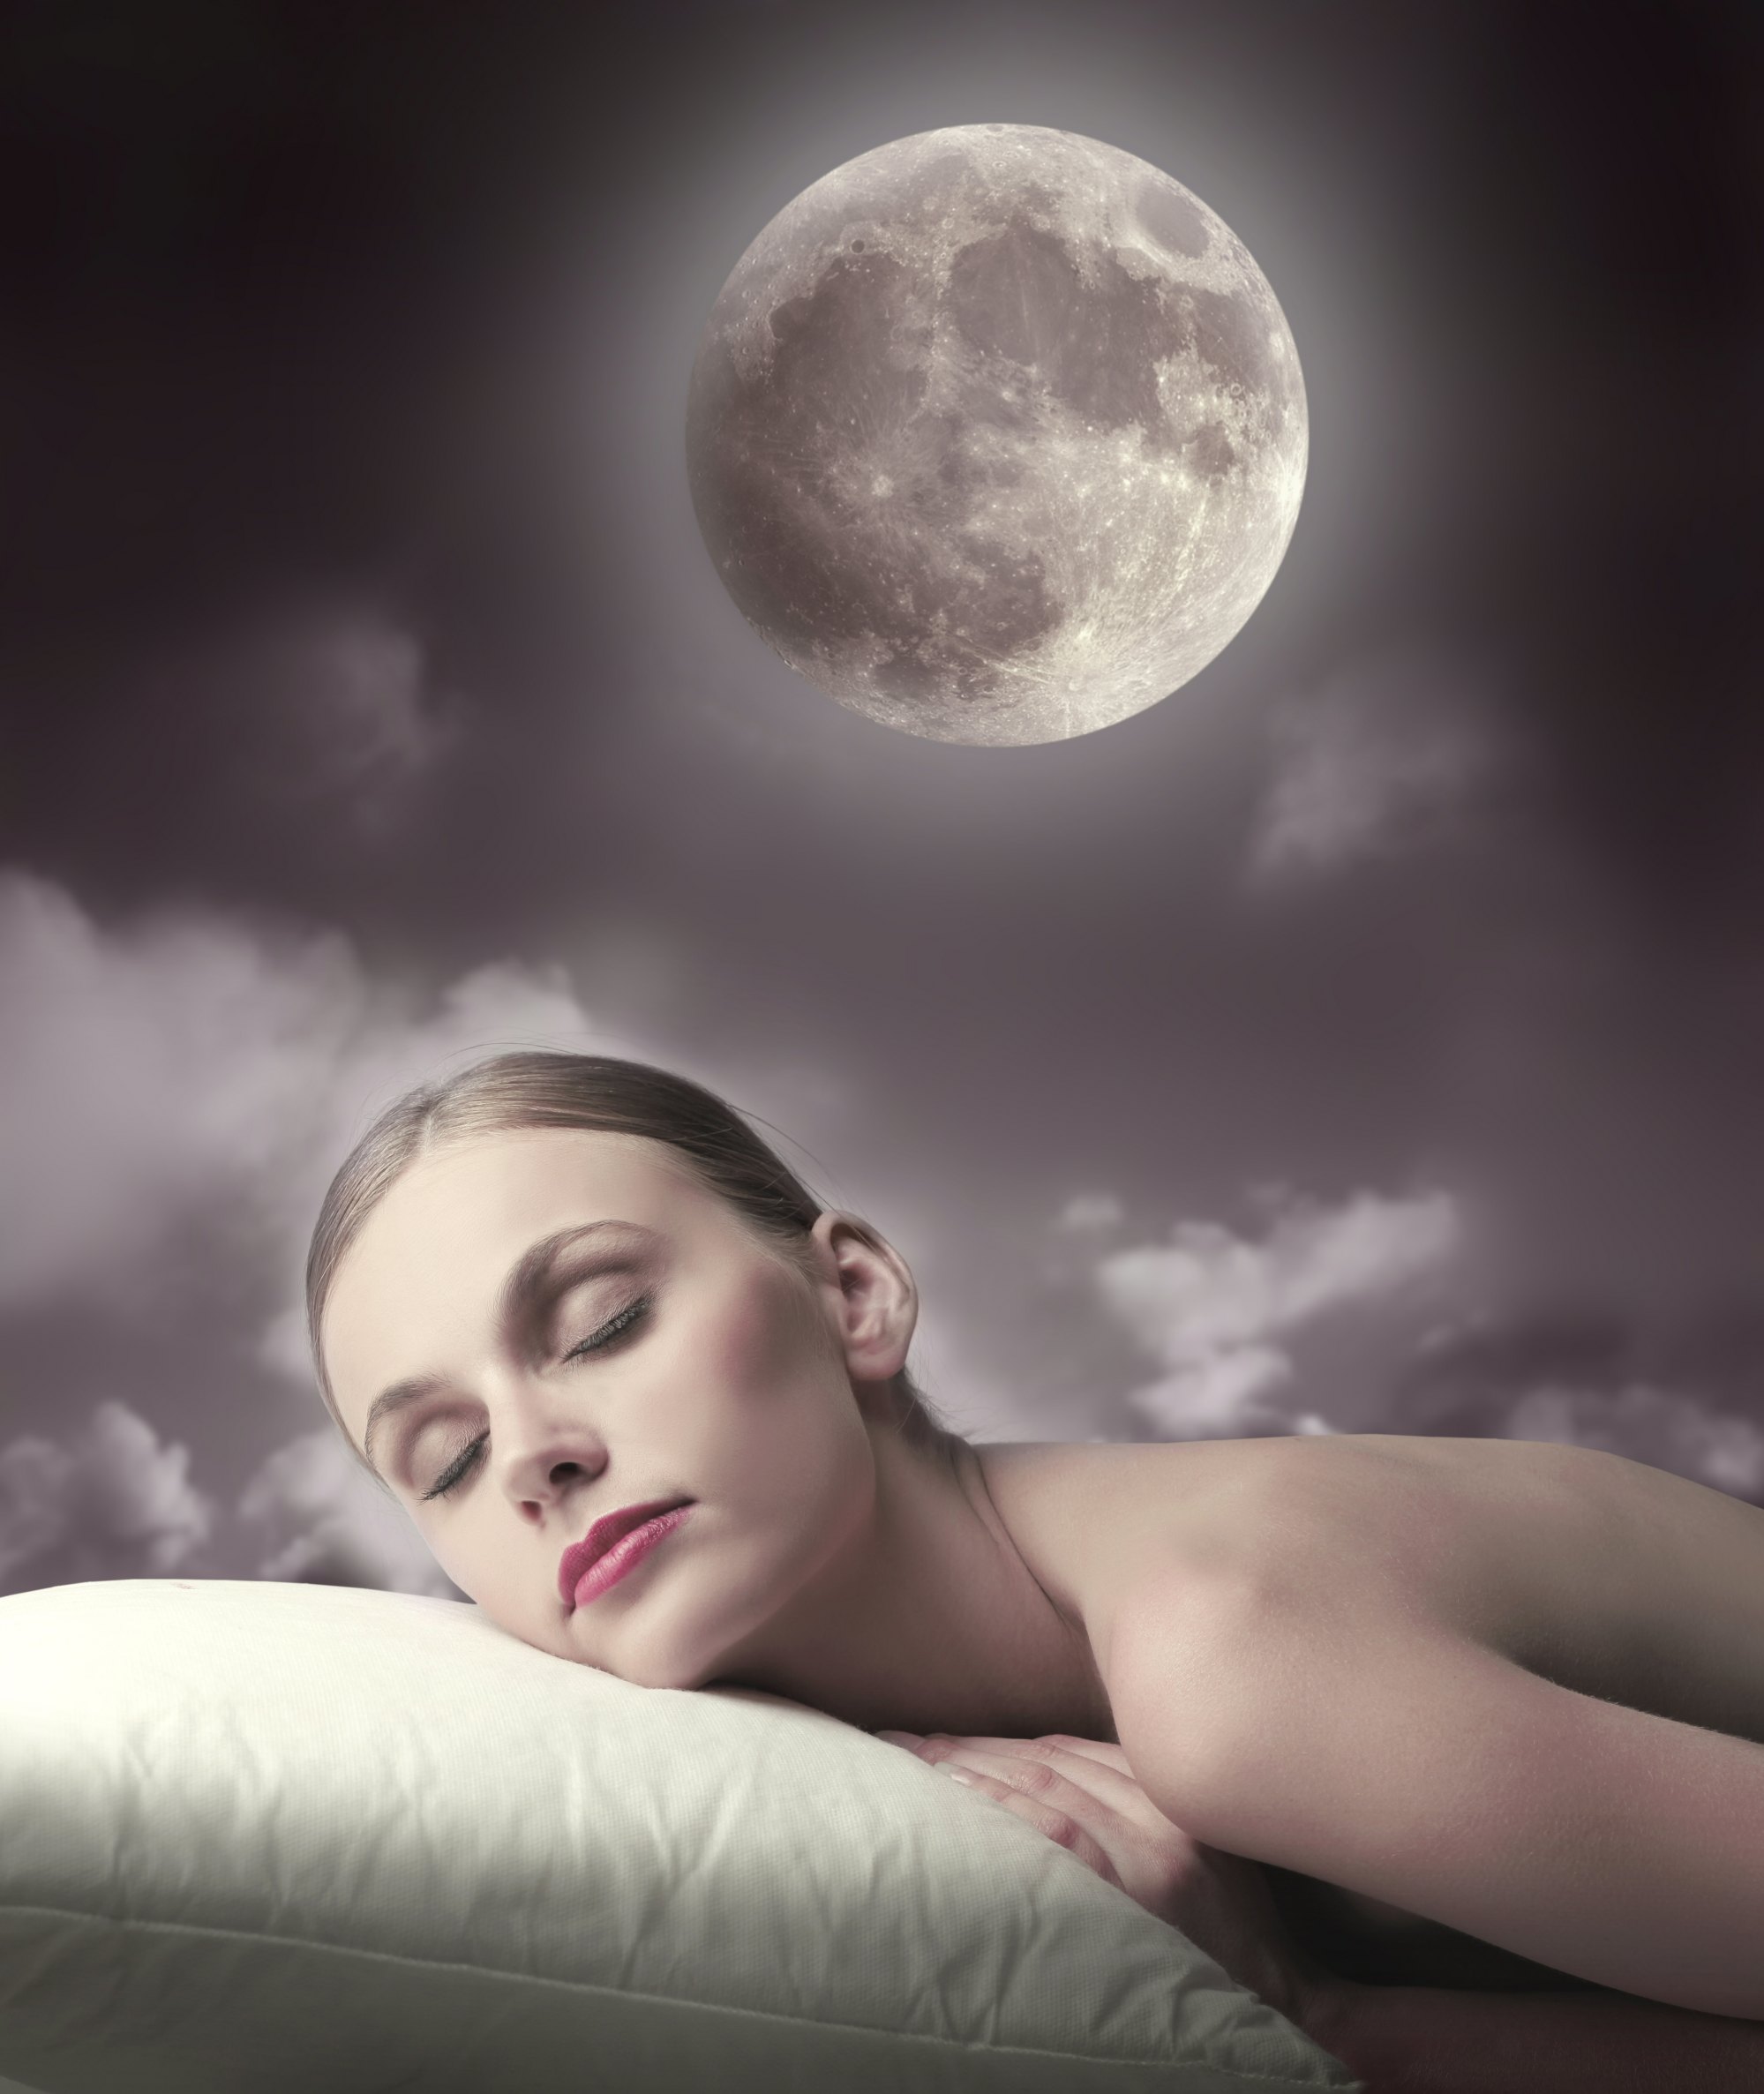 woman sleeping in the moonlight